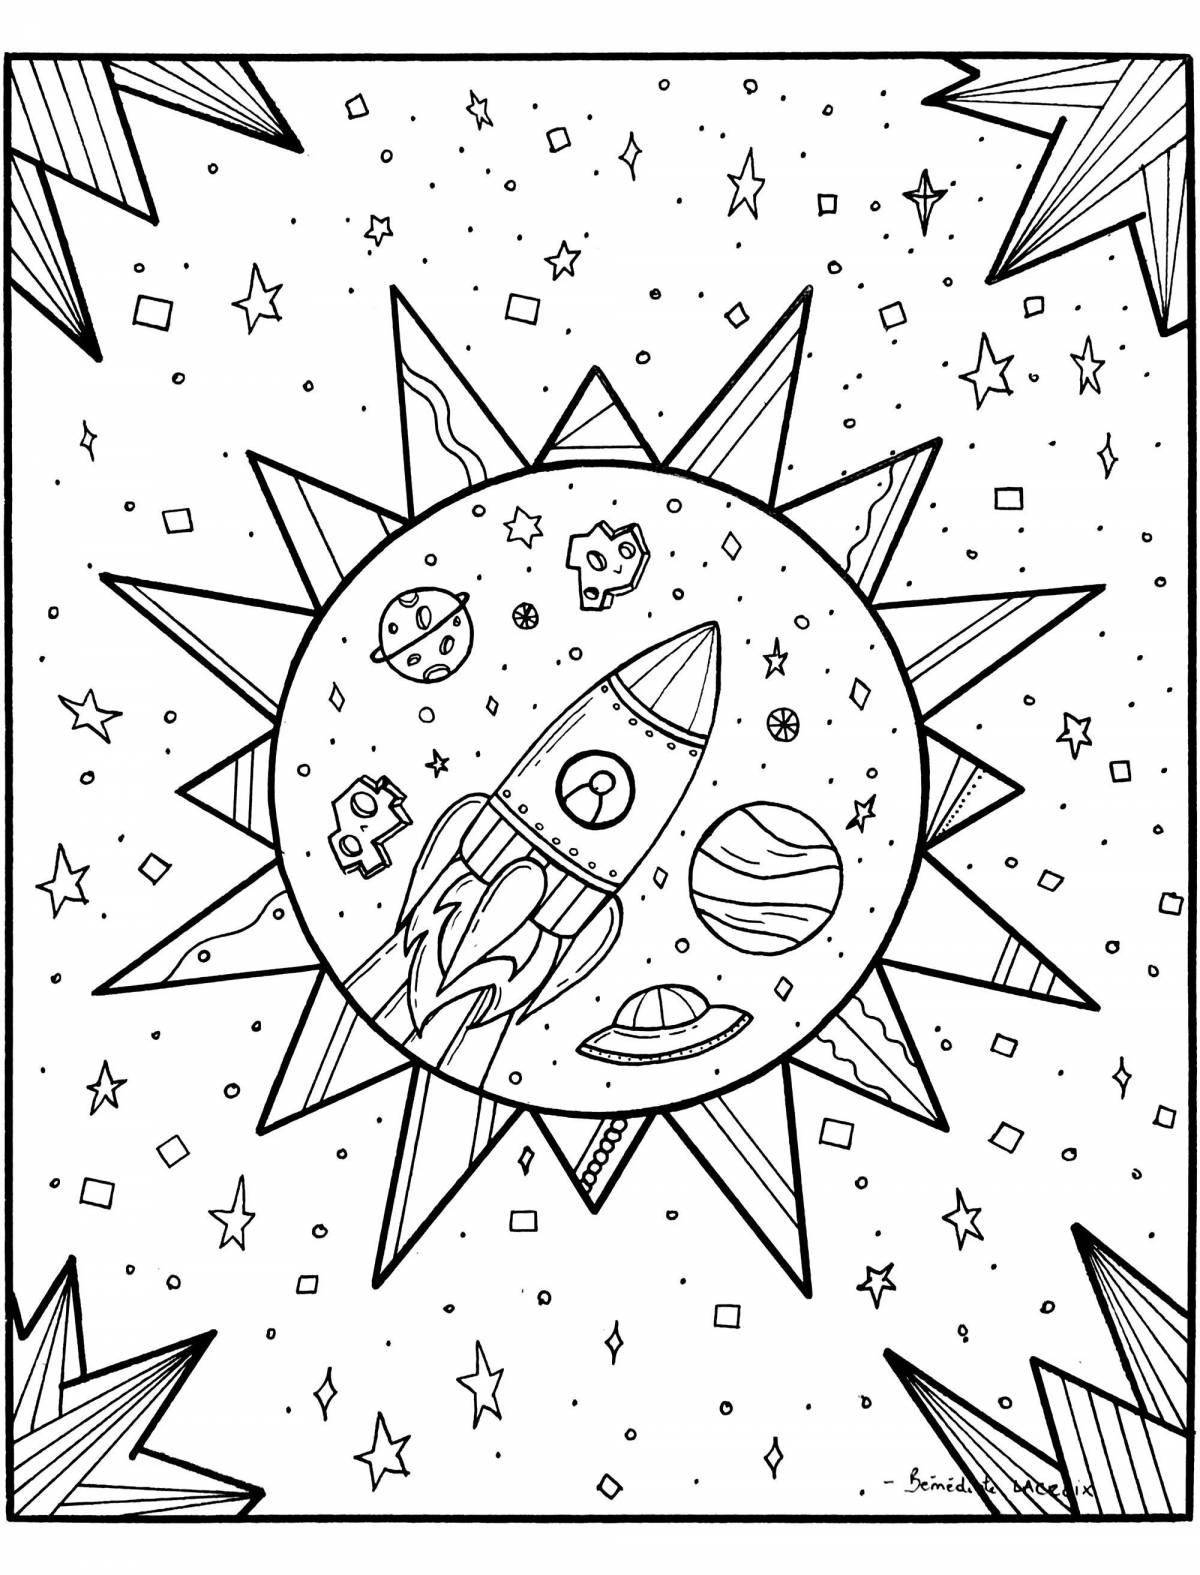 Gorgeous intergalactic space coloring book